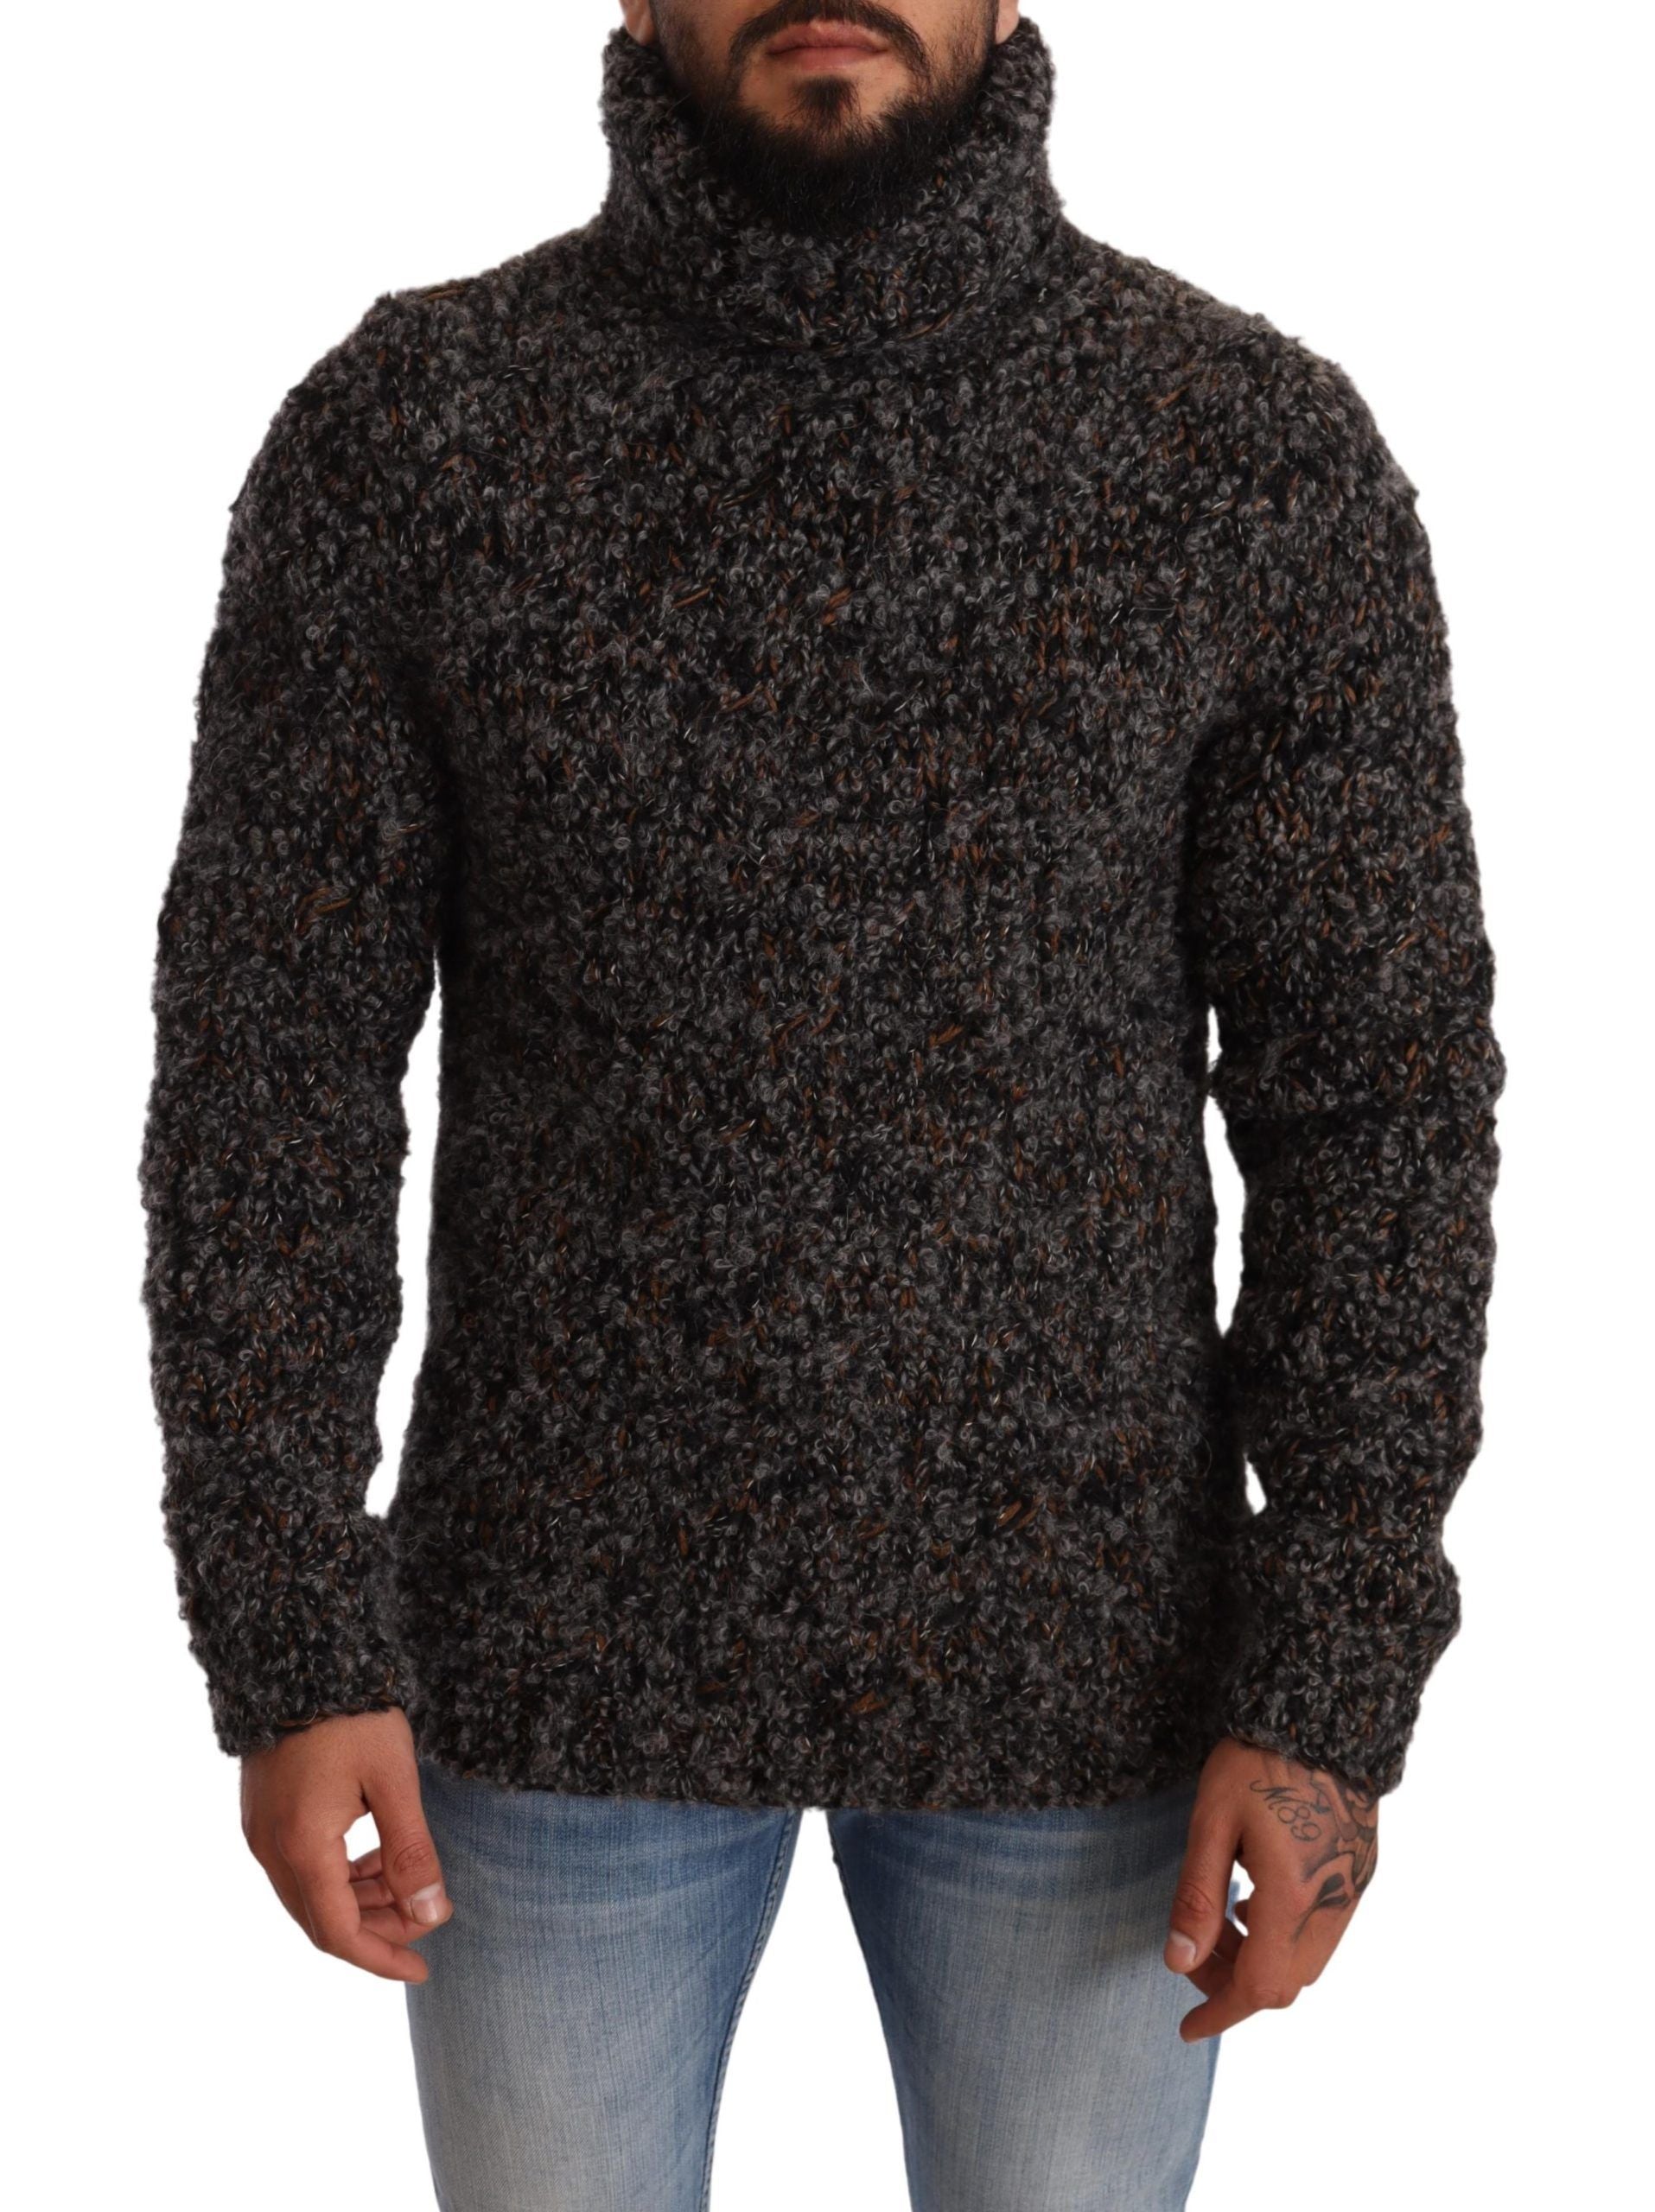 DOLCE & GABBANA Dolce & Gabbana  Wool Blend Turtleneck Pullover Men's Sweater